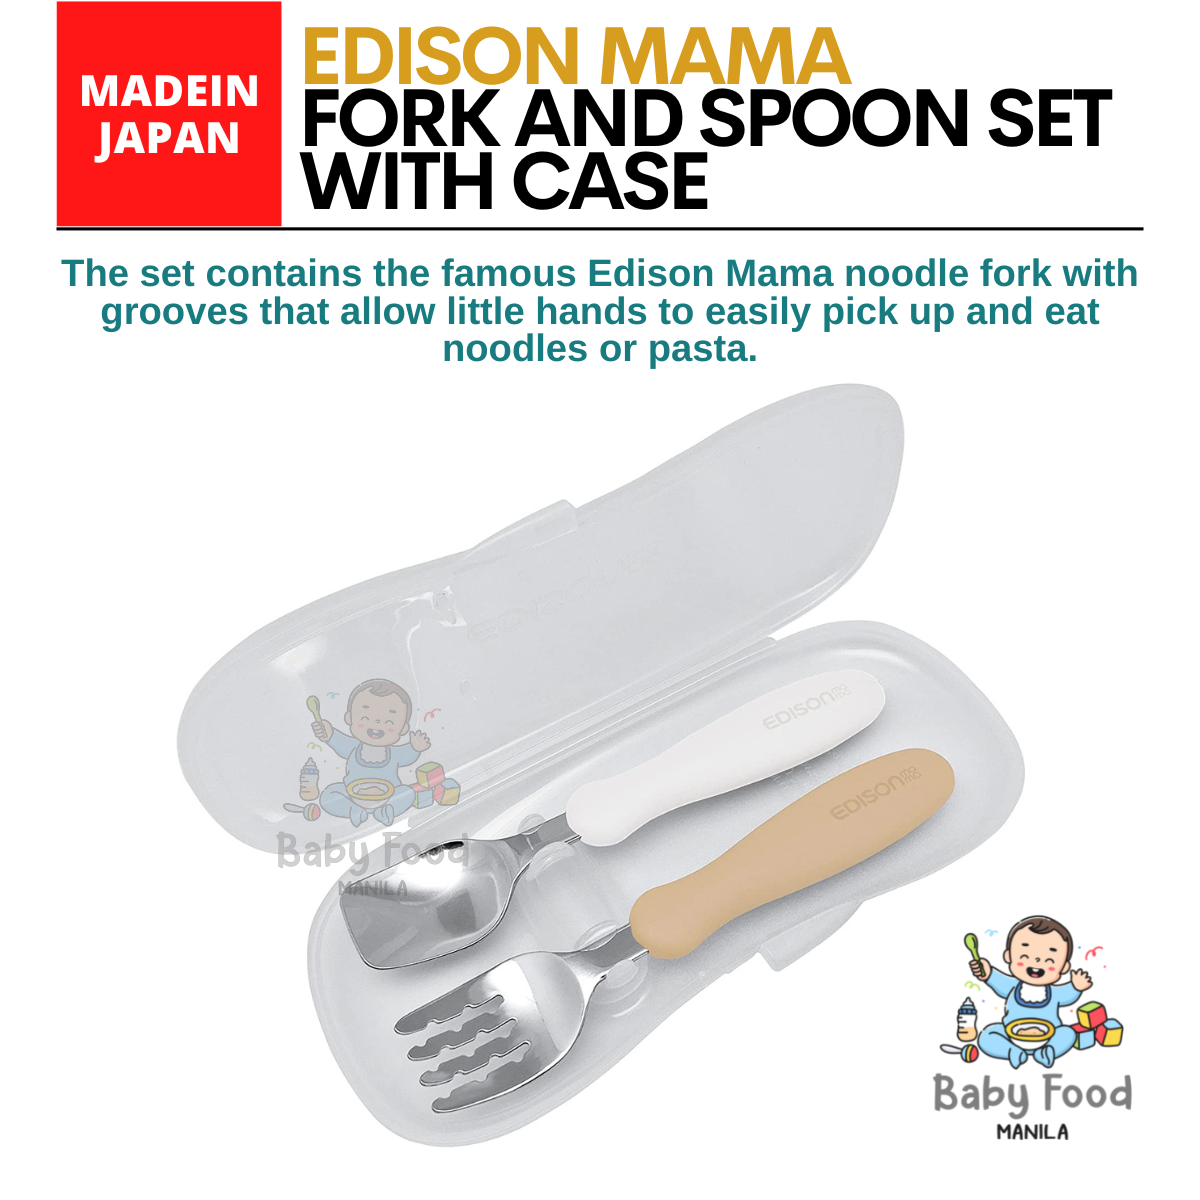 EDISON MAMA Spoon & Fork set with travel case (Tan & White